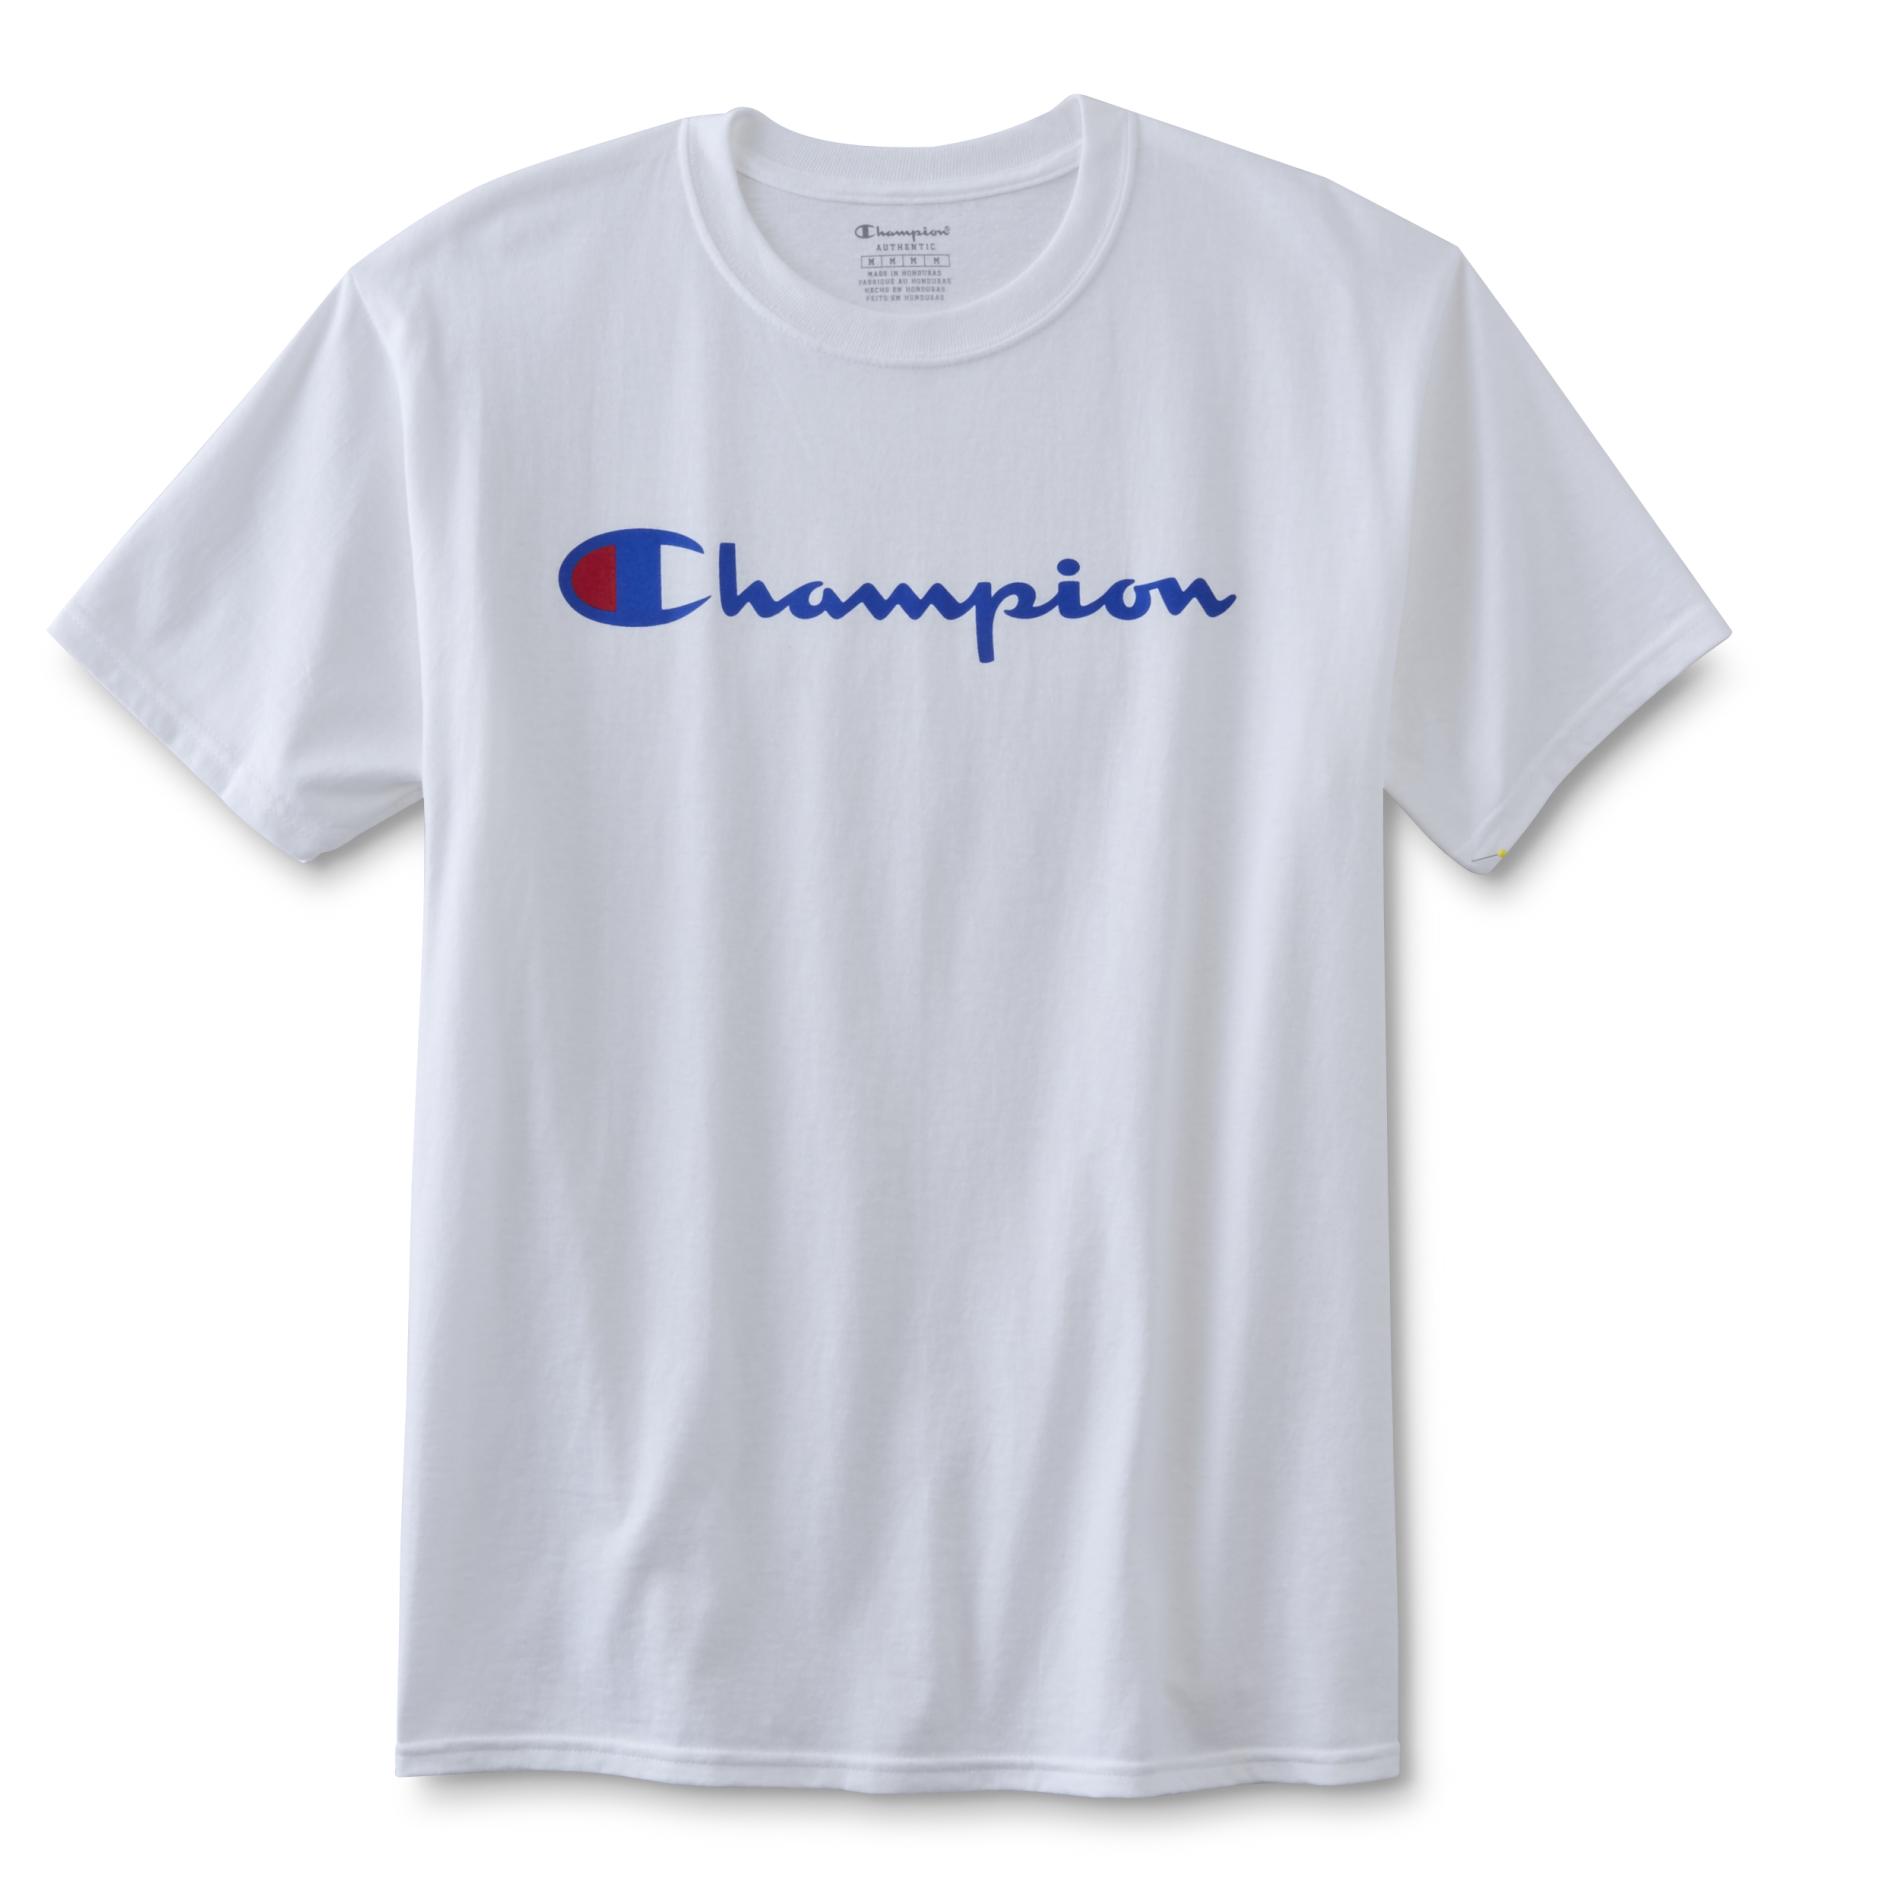 sears champion shirt